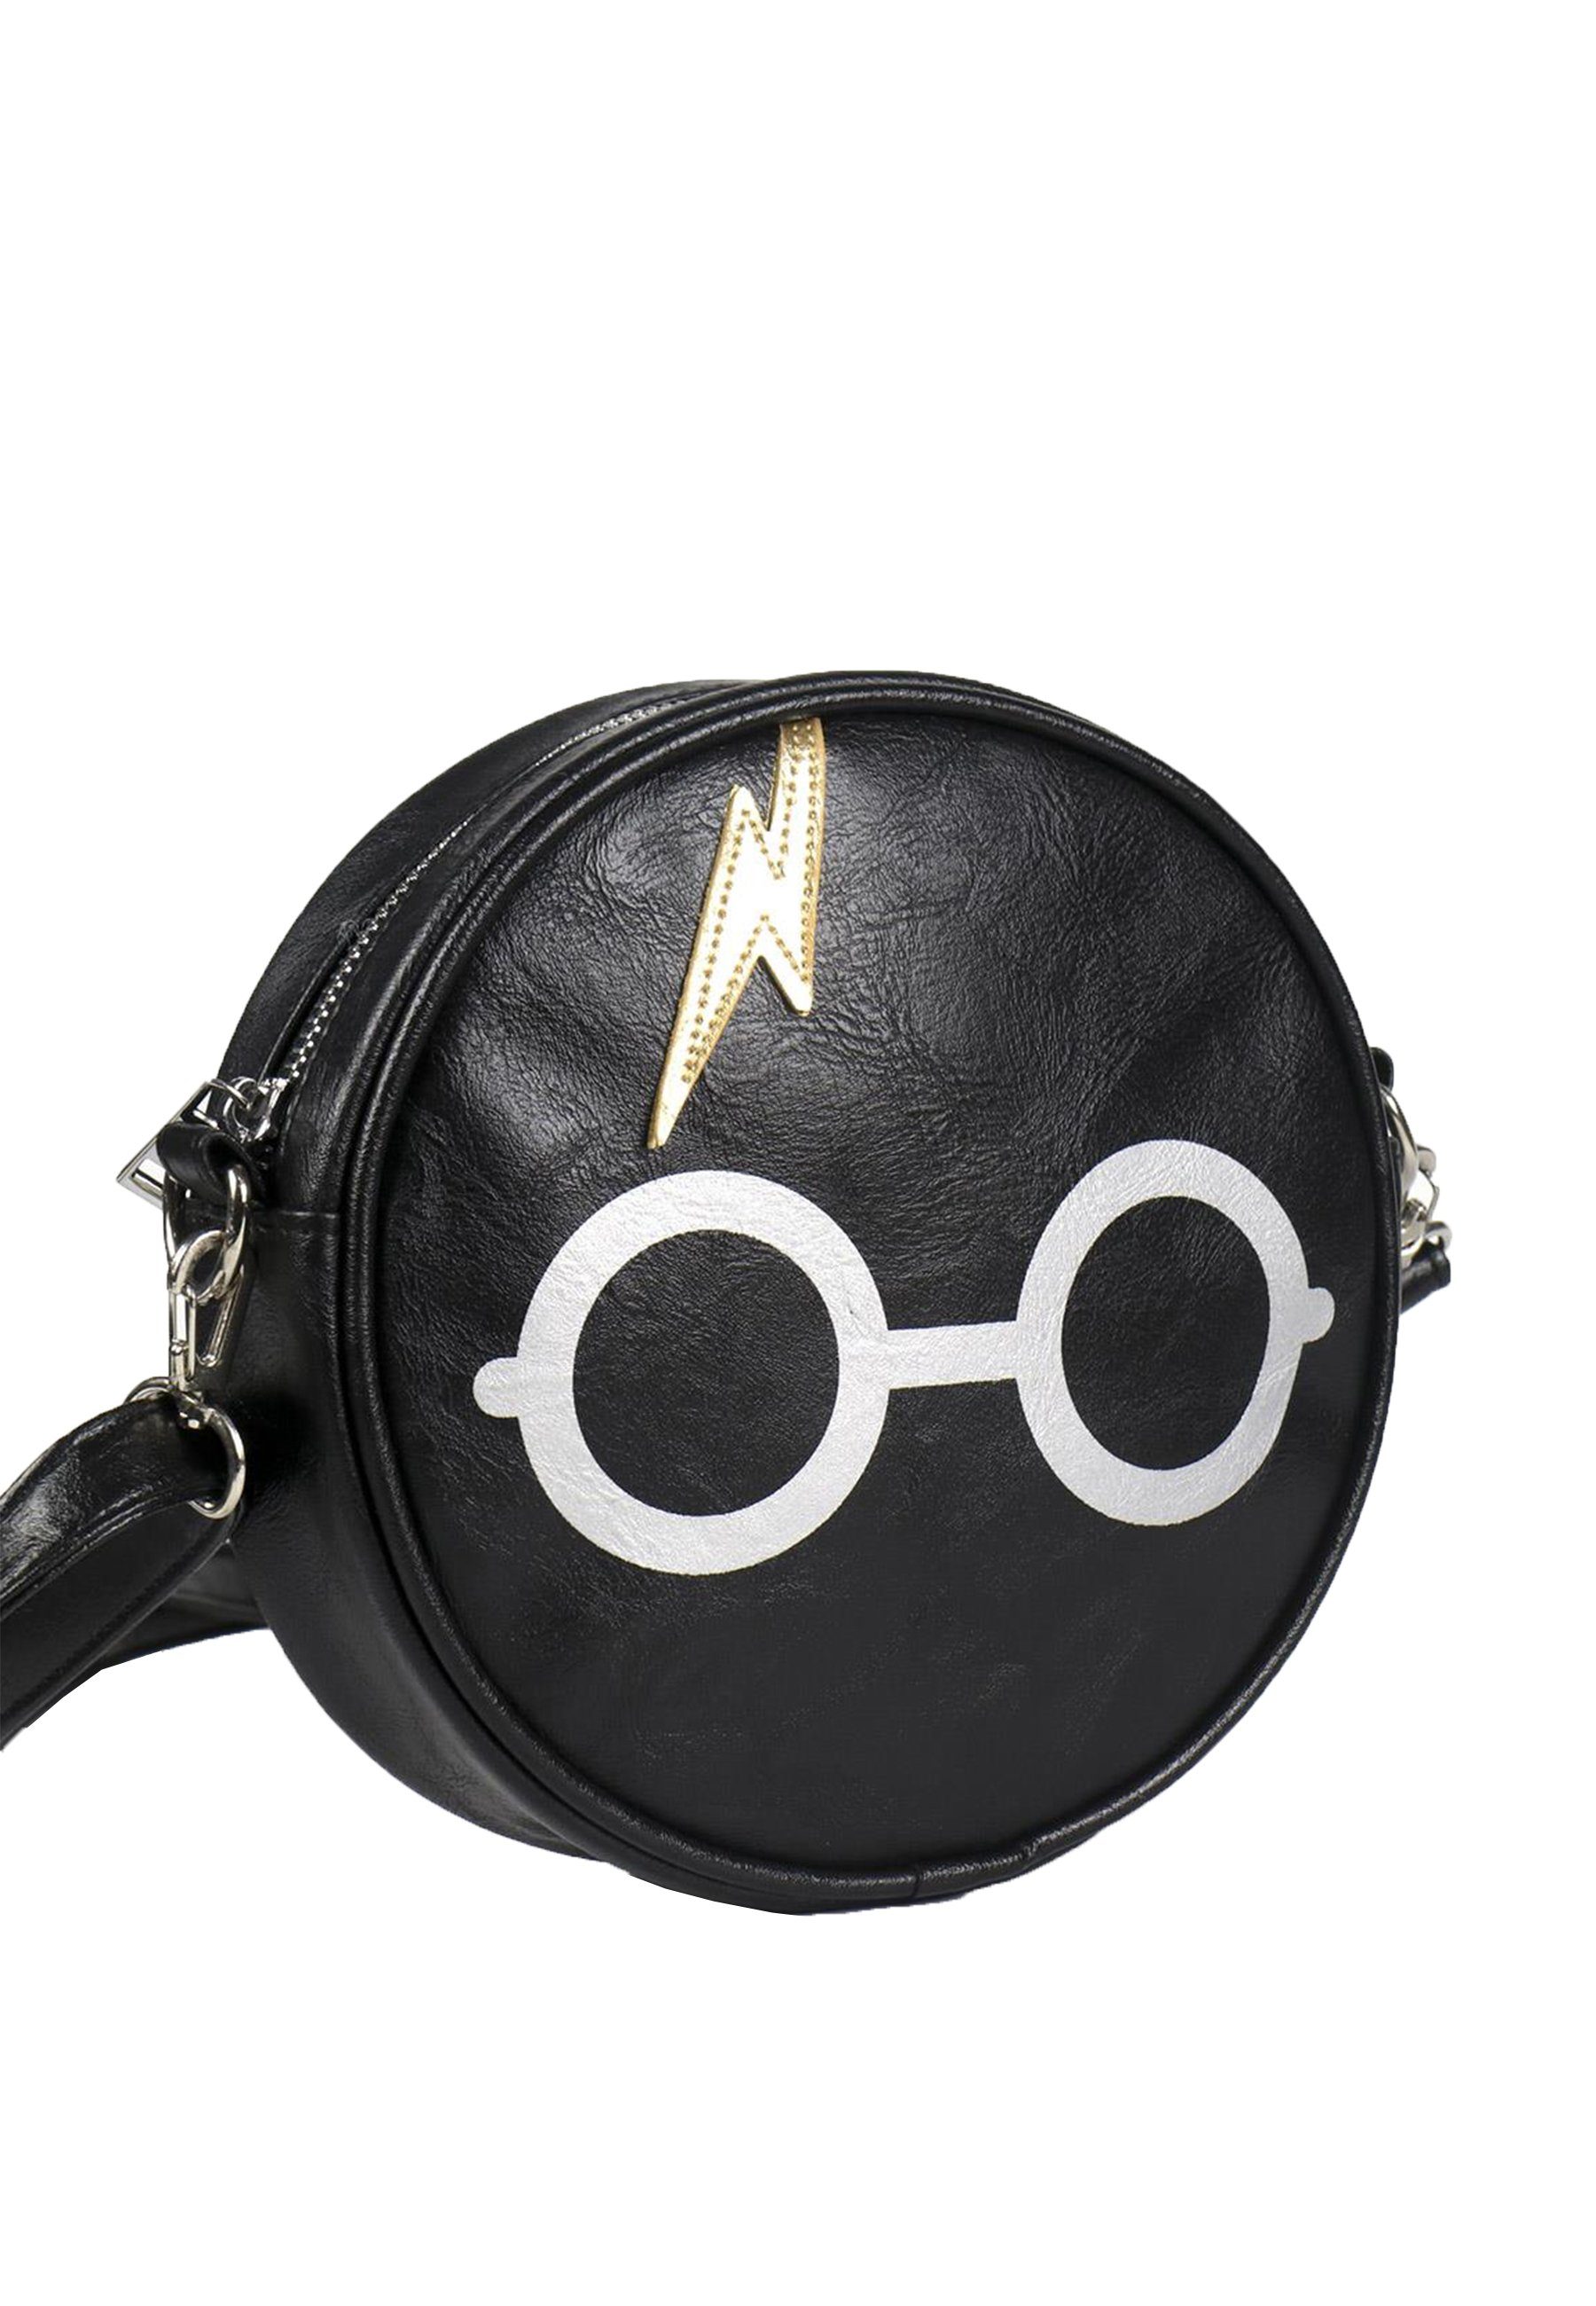 Harry Potter in Optik Handtasche Leder rund Clutch